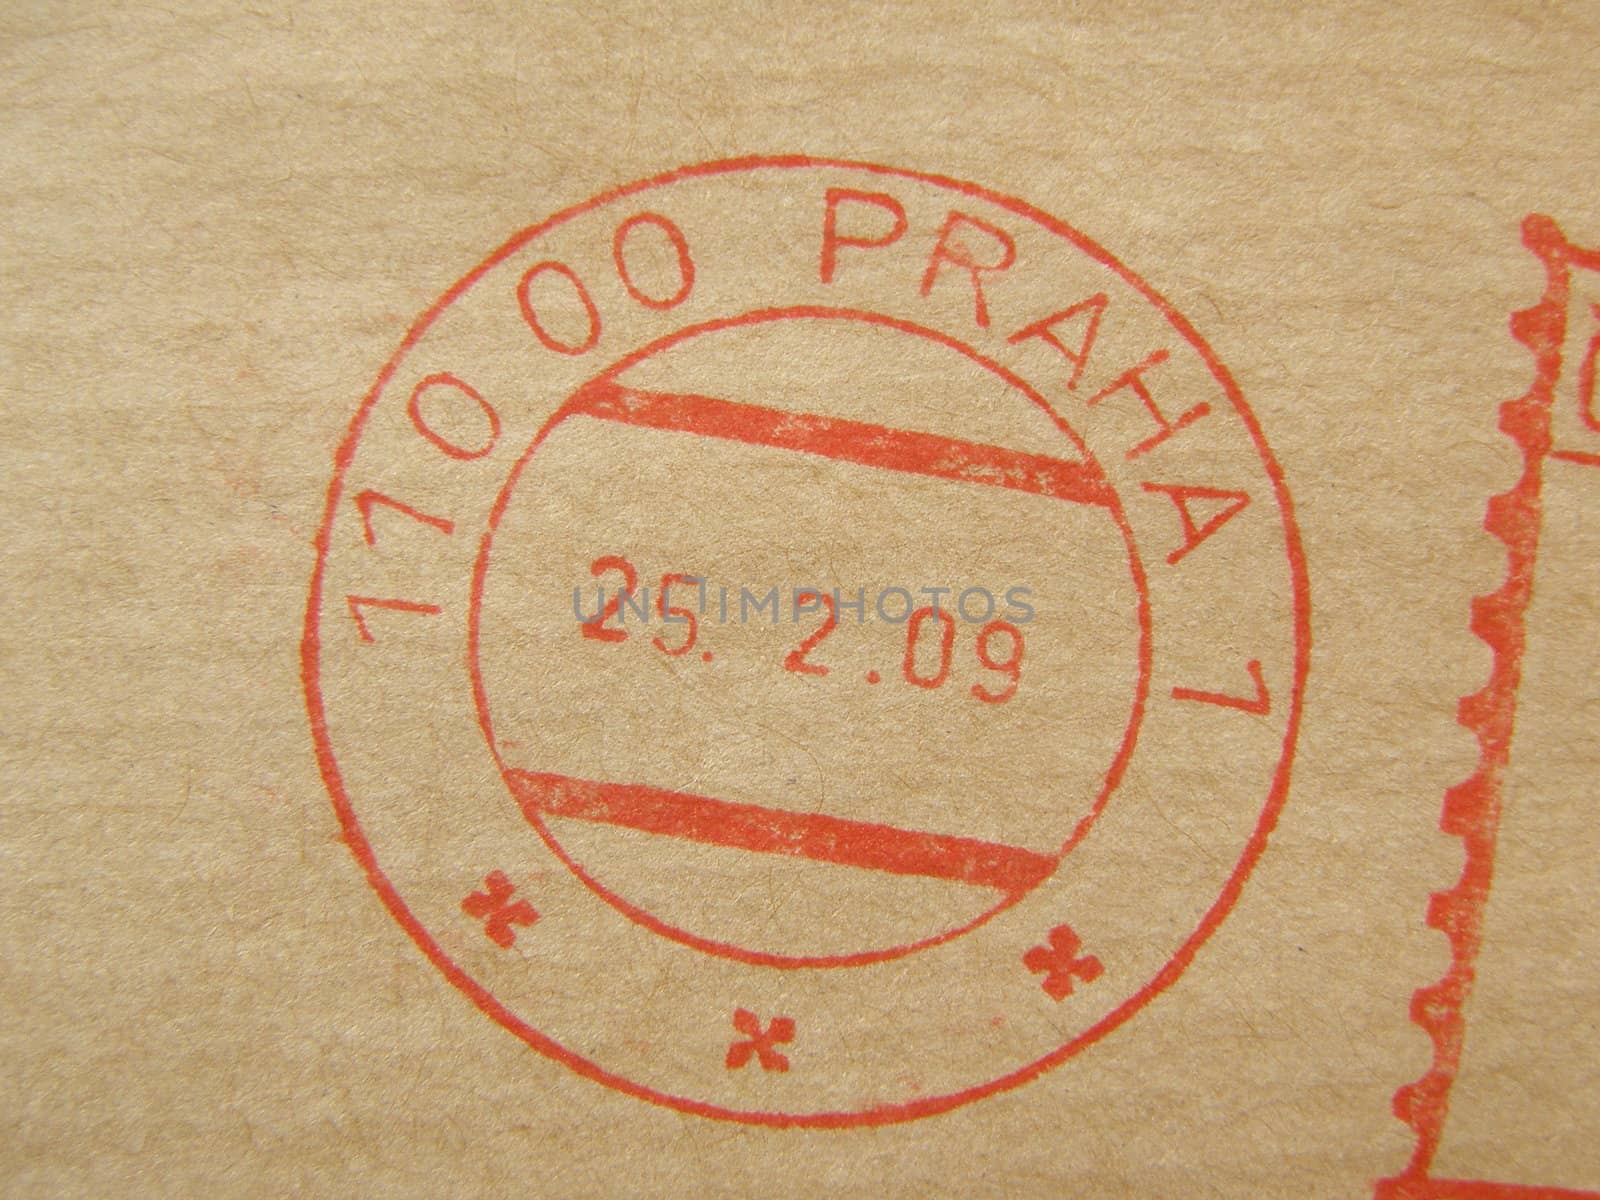 red ink postage meter from Prague over brown envelope